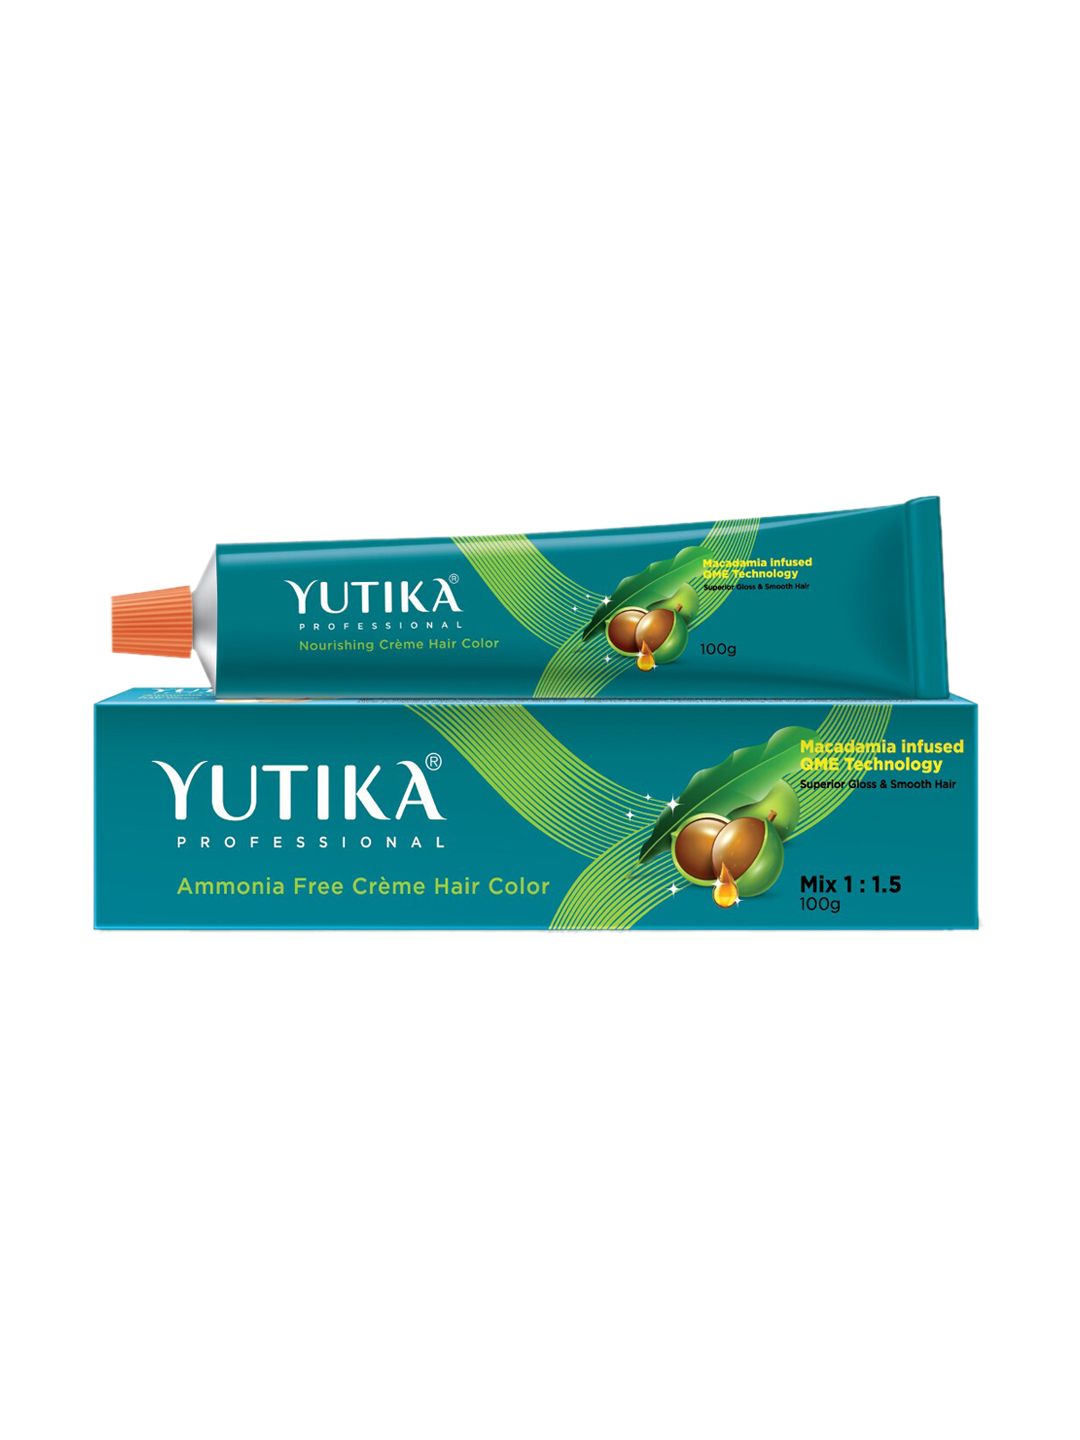 YUTIKA Professional Creme Hair Color Pro-Darkest-Brown-2.0 100gms Price in India